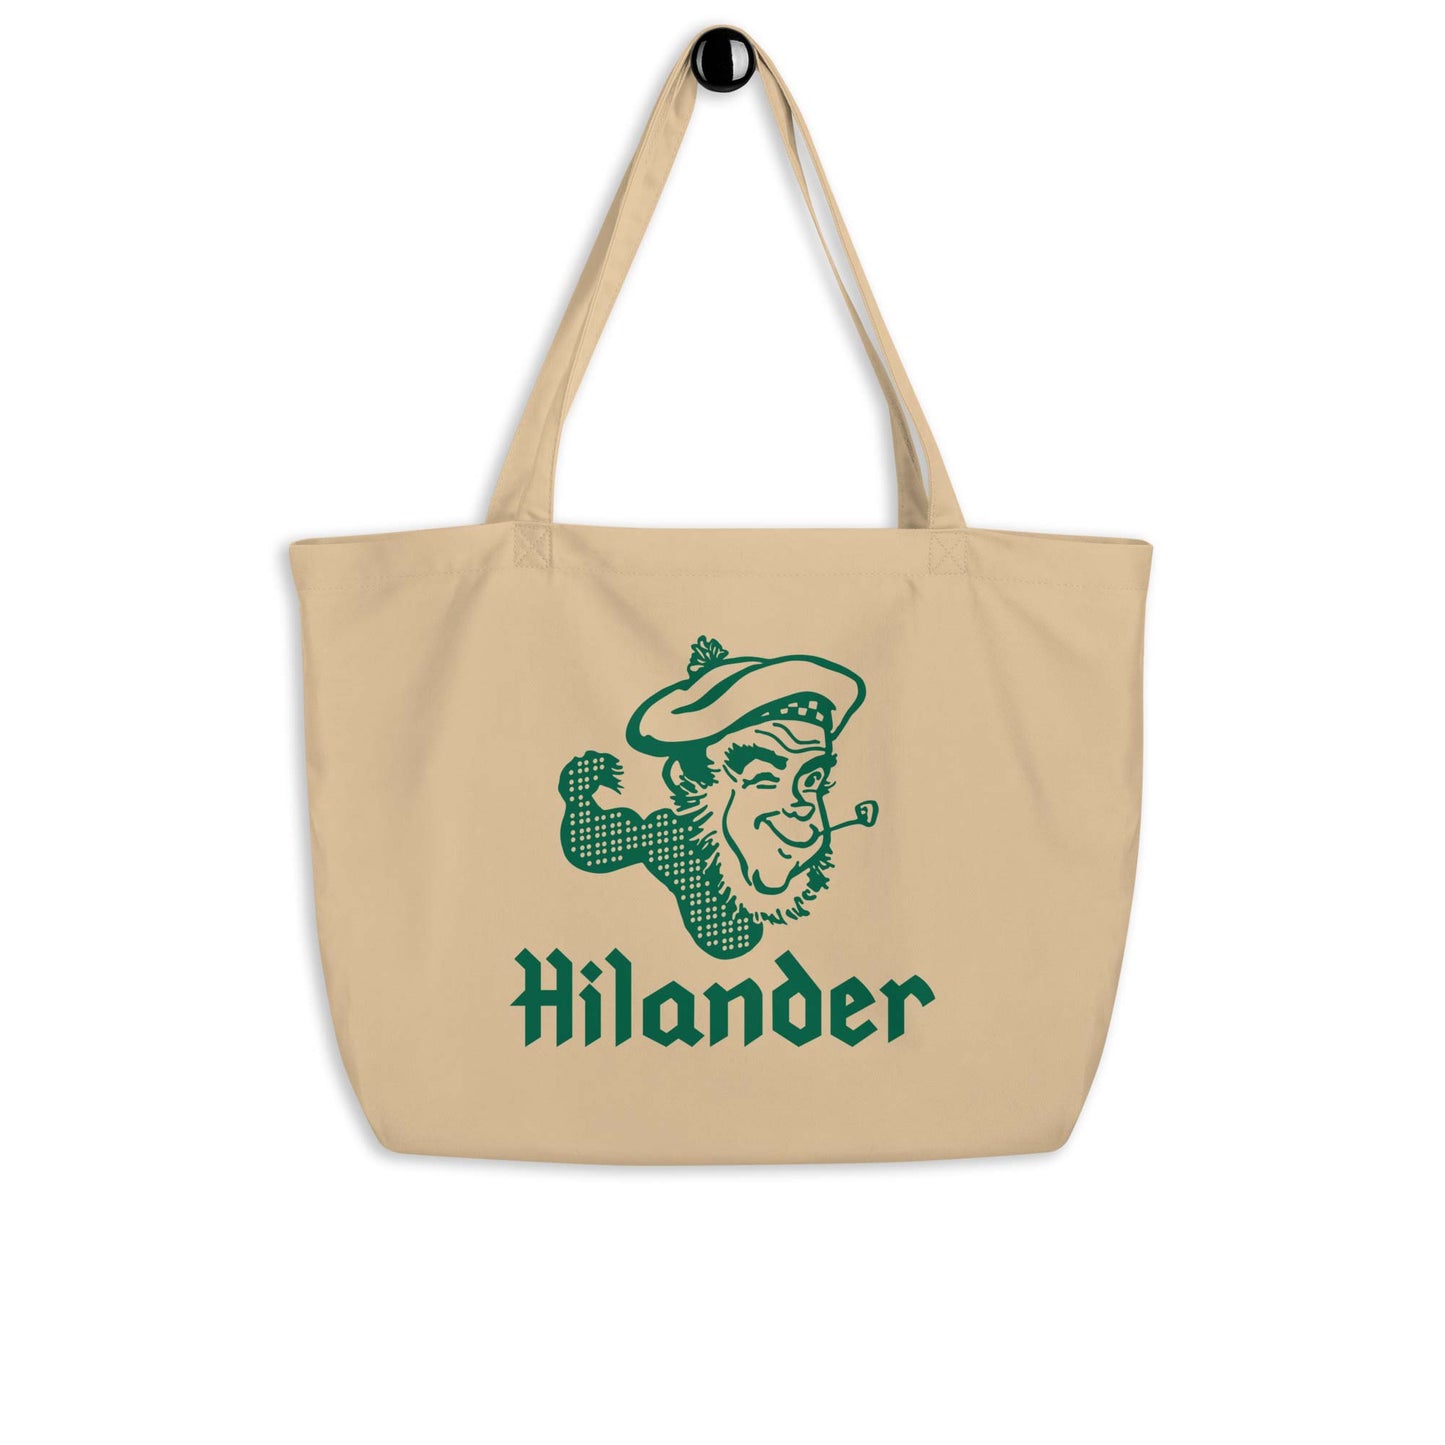 Hilander Grocery Store Rockford Large organic tote bag